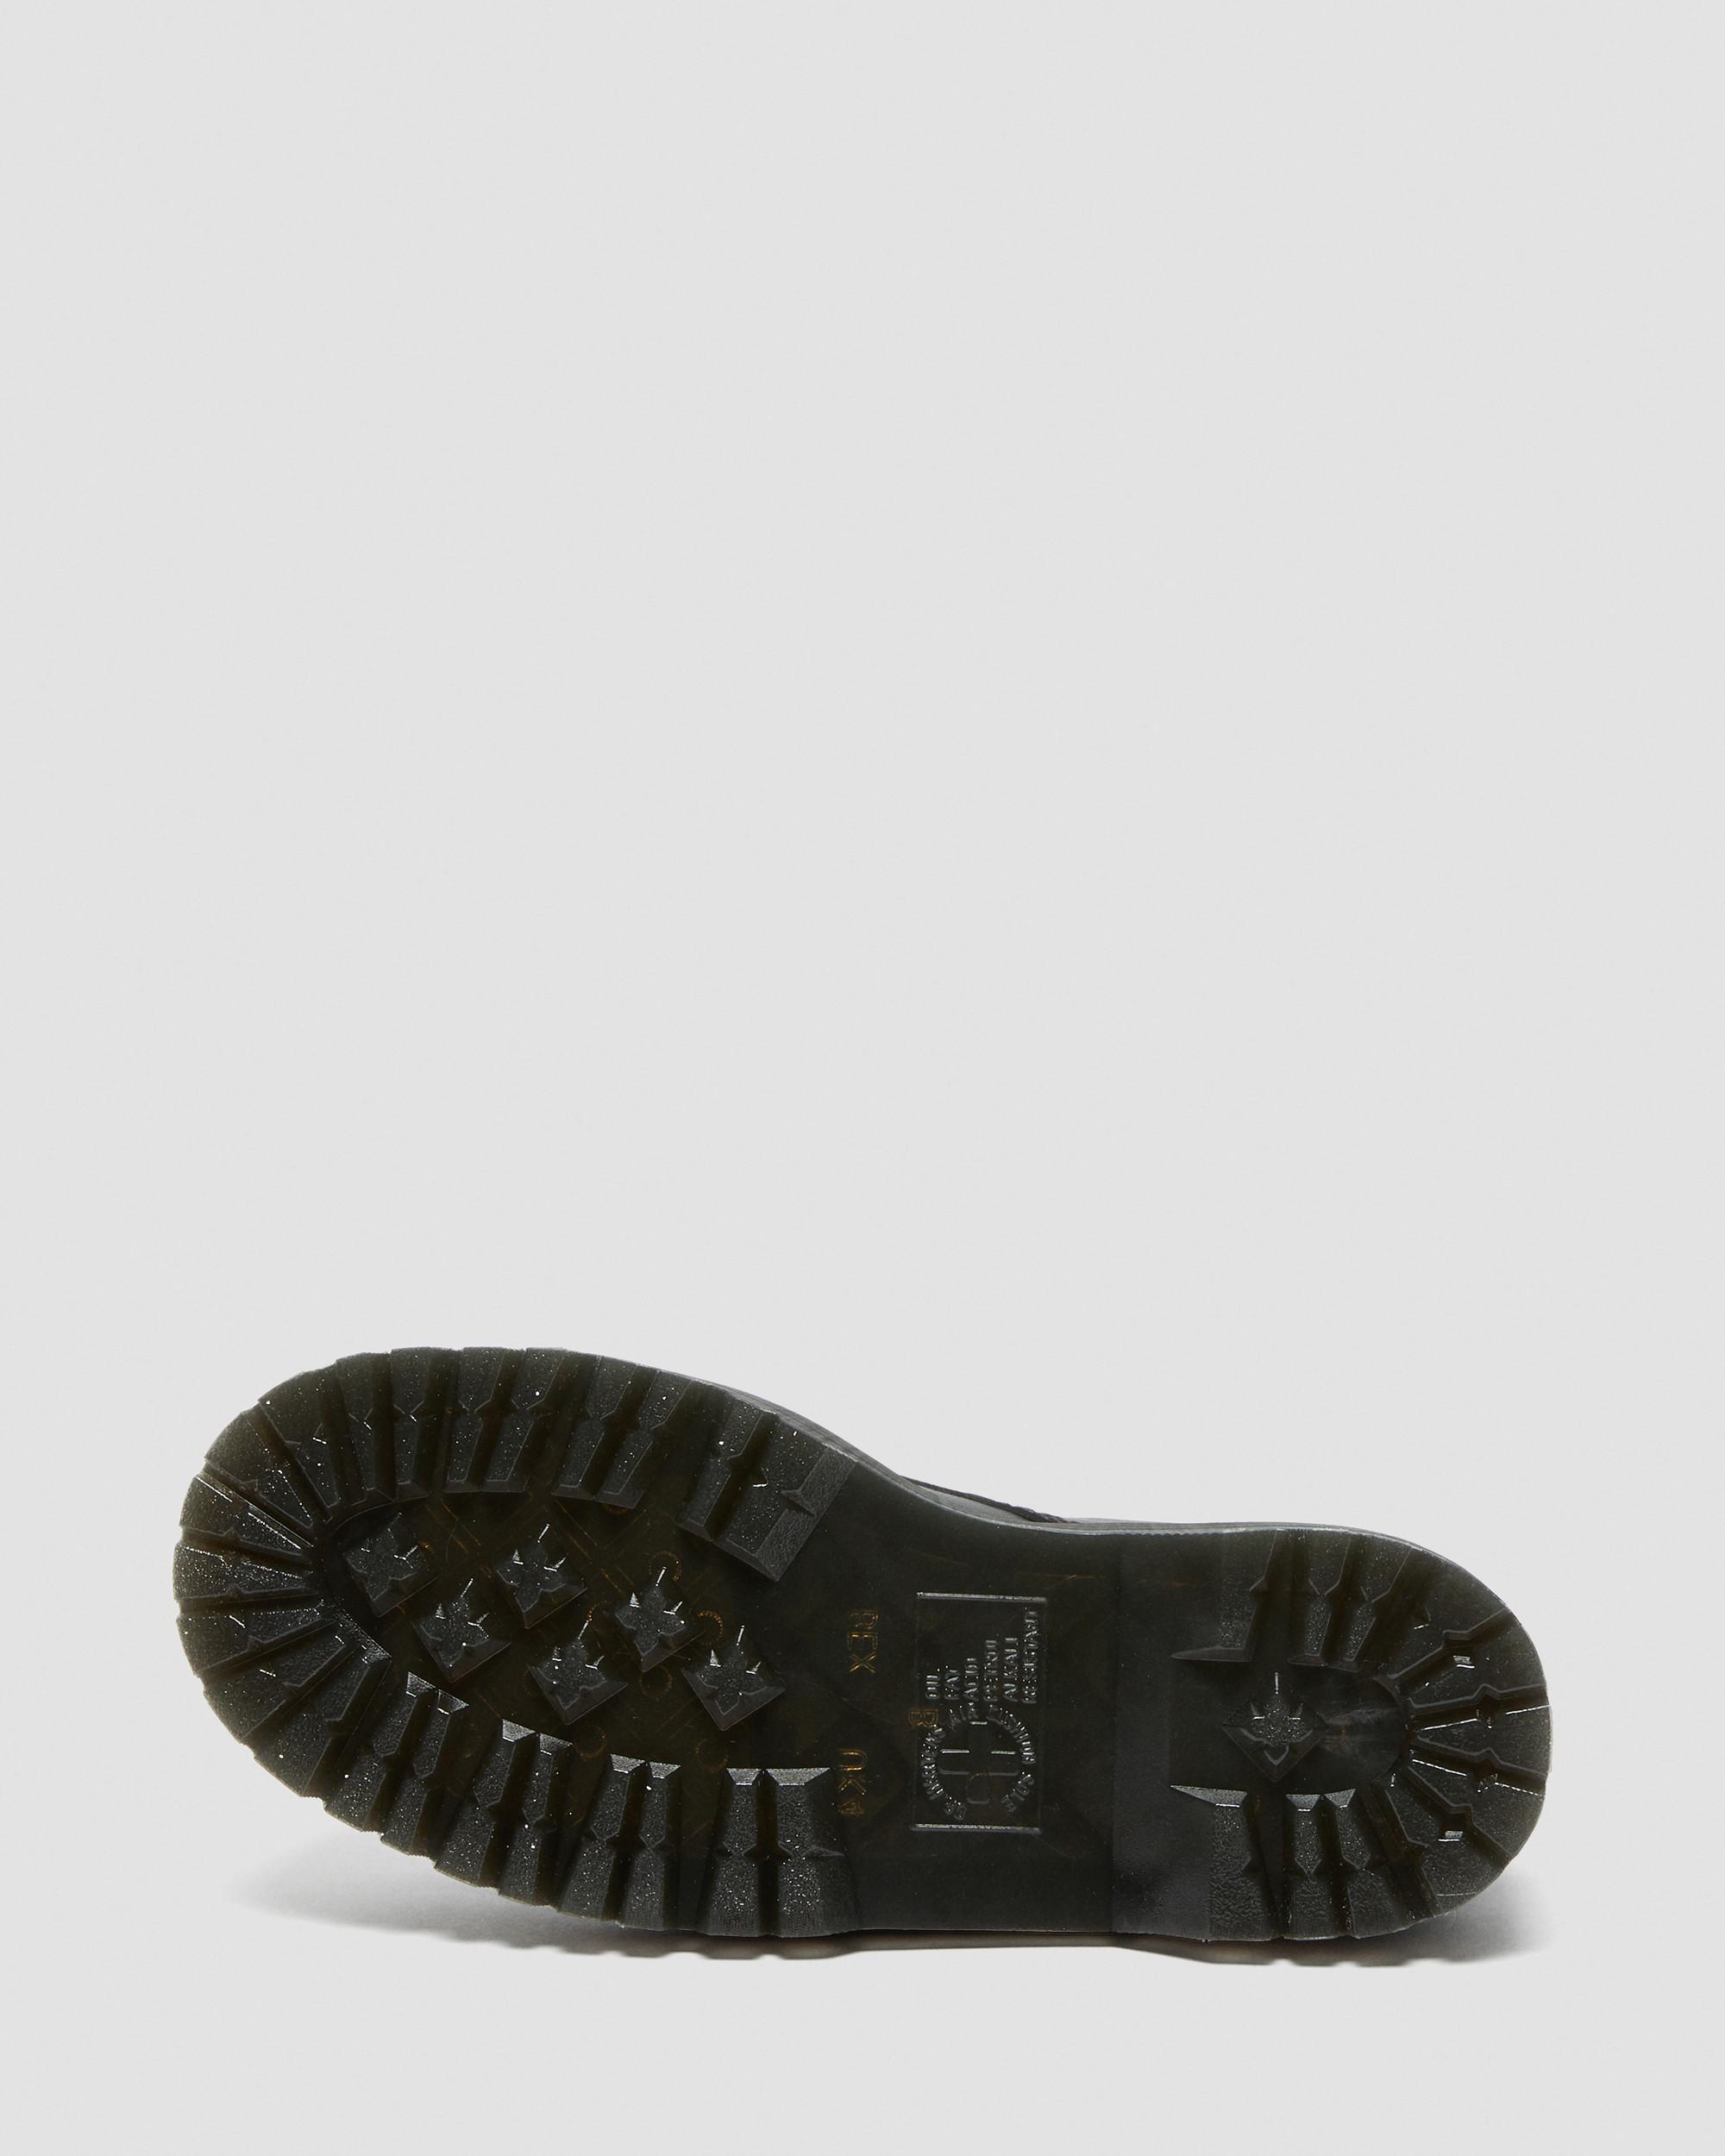 Sinclair Max Pisa Leather Platform Boots in Black | Dr. Martens